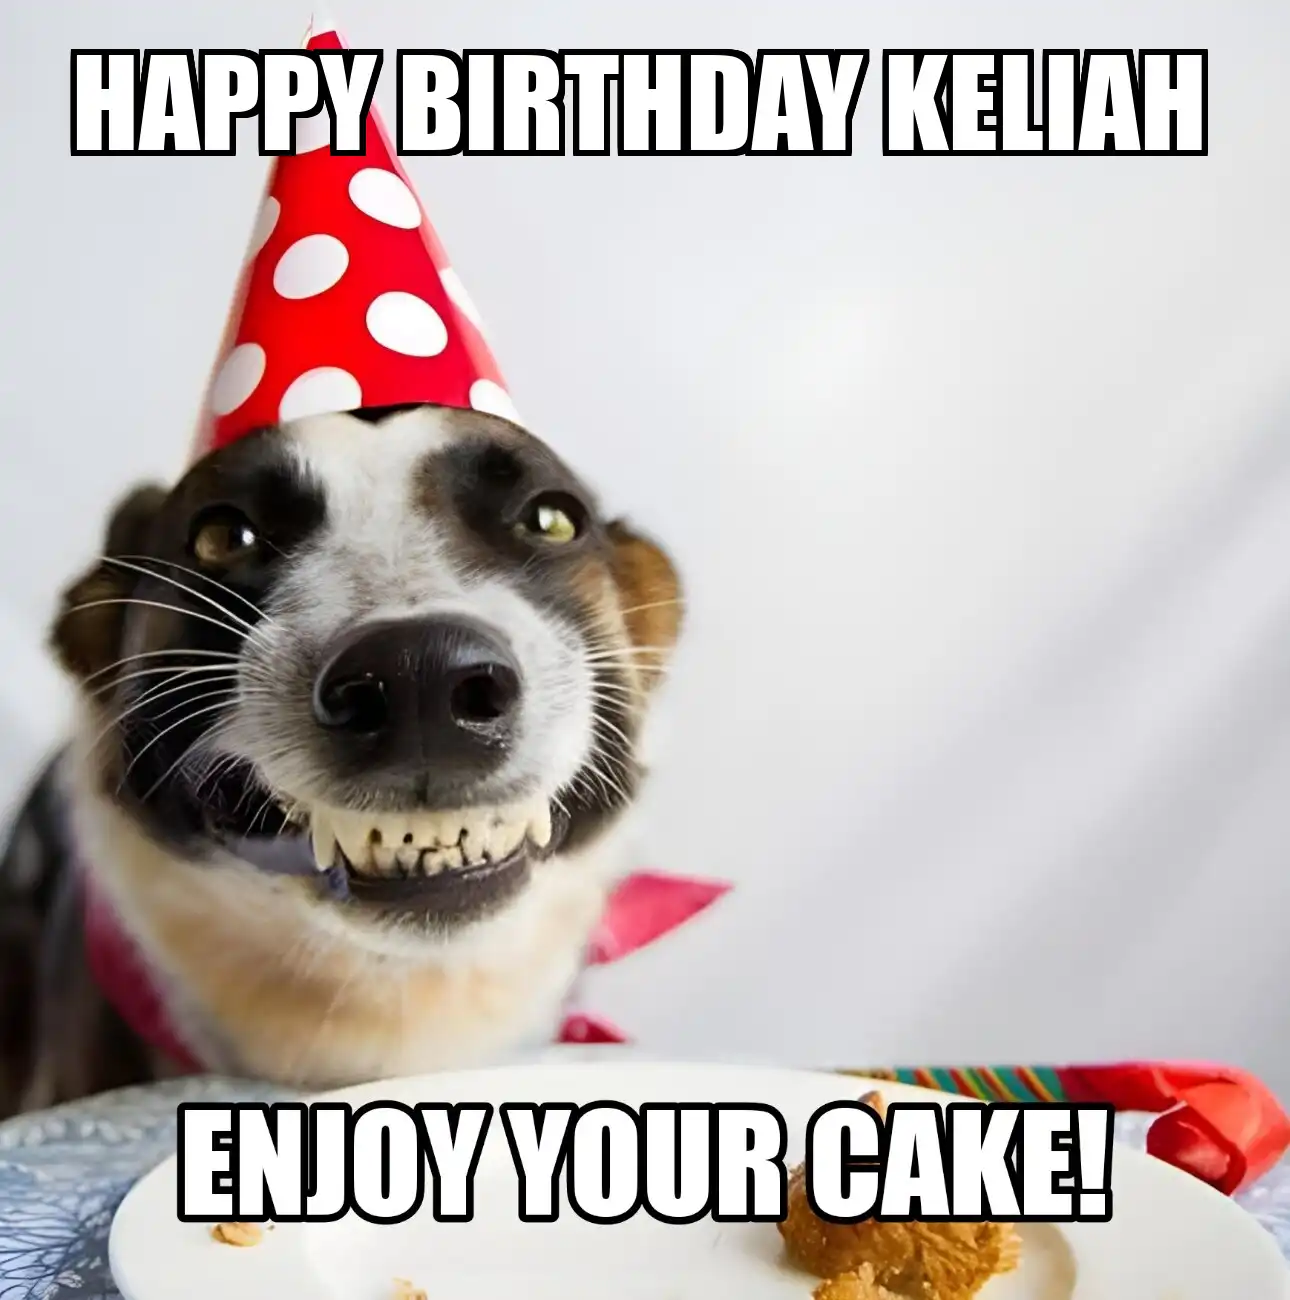 Happy Birthday Keliah Enjoy Your Cake Dog Meme